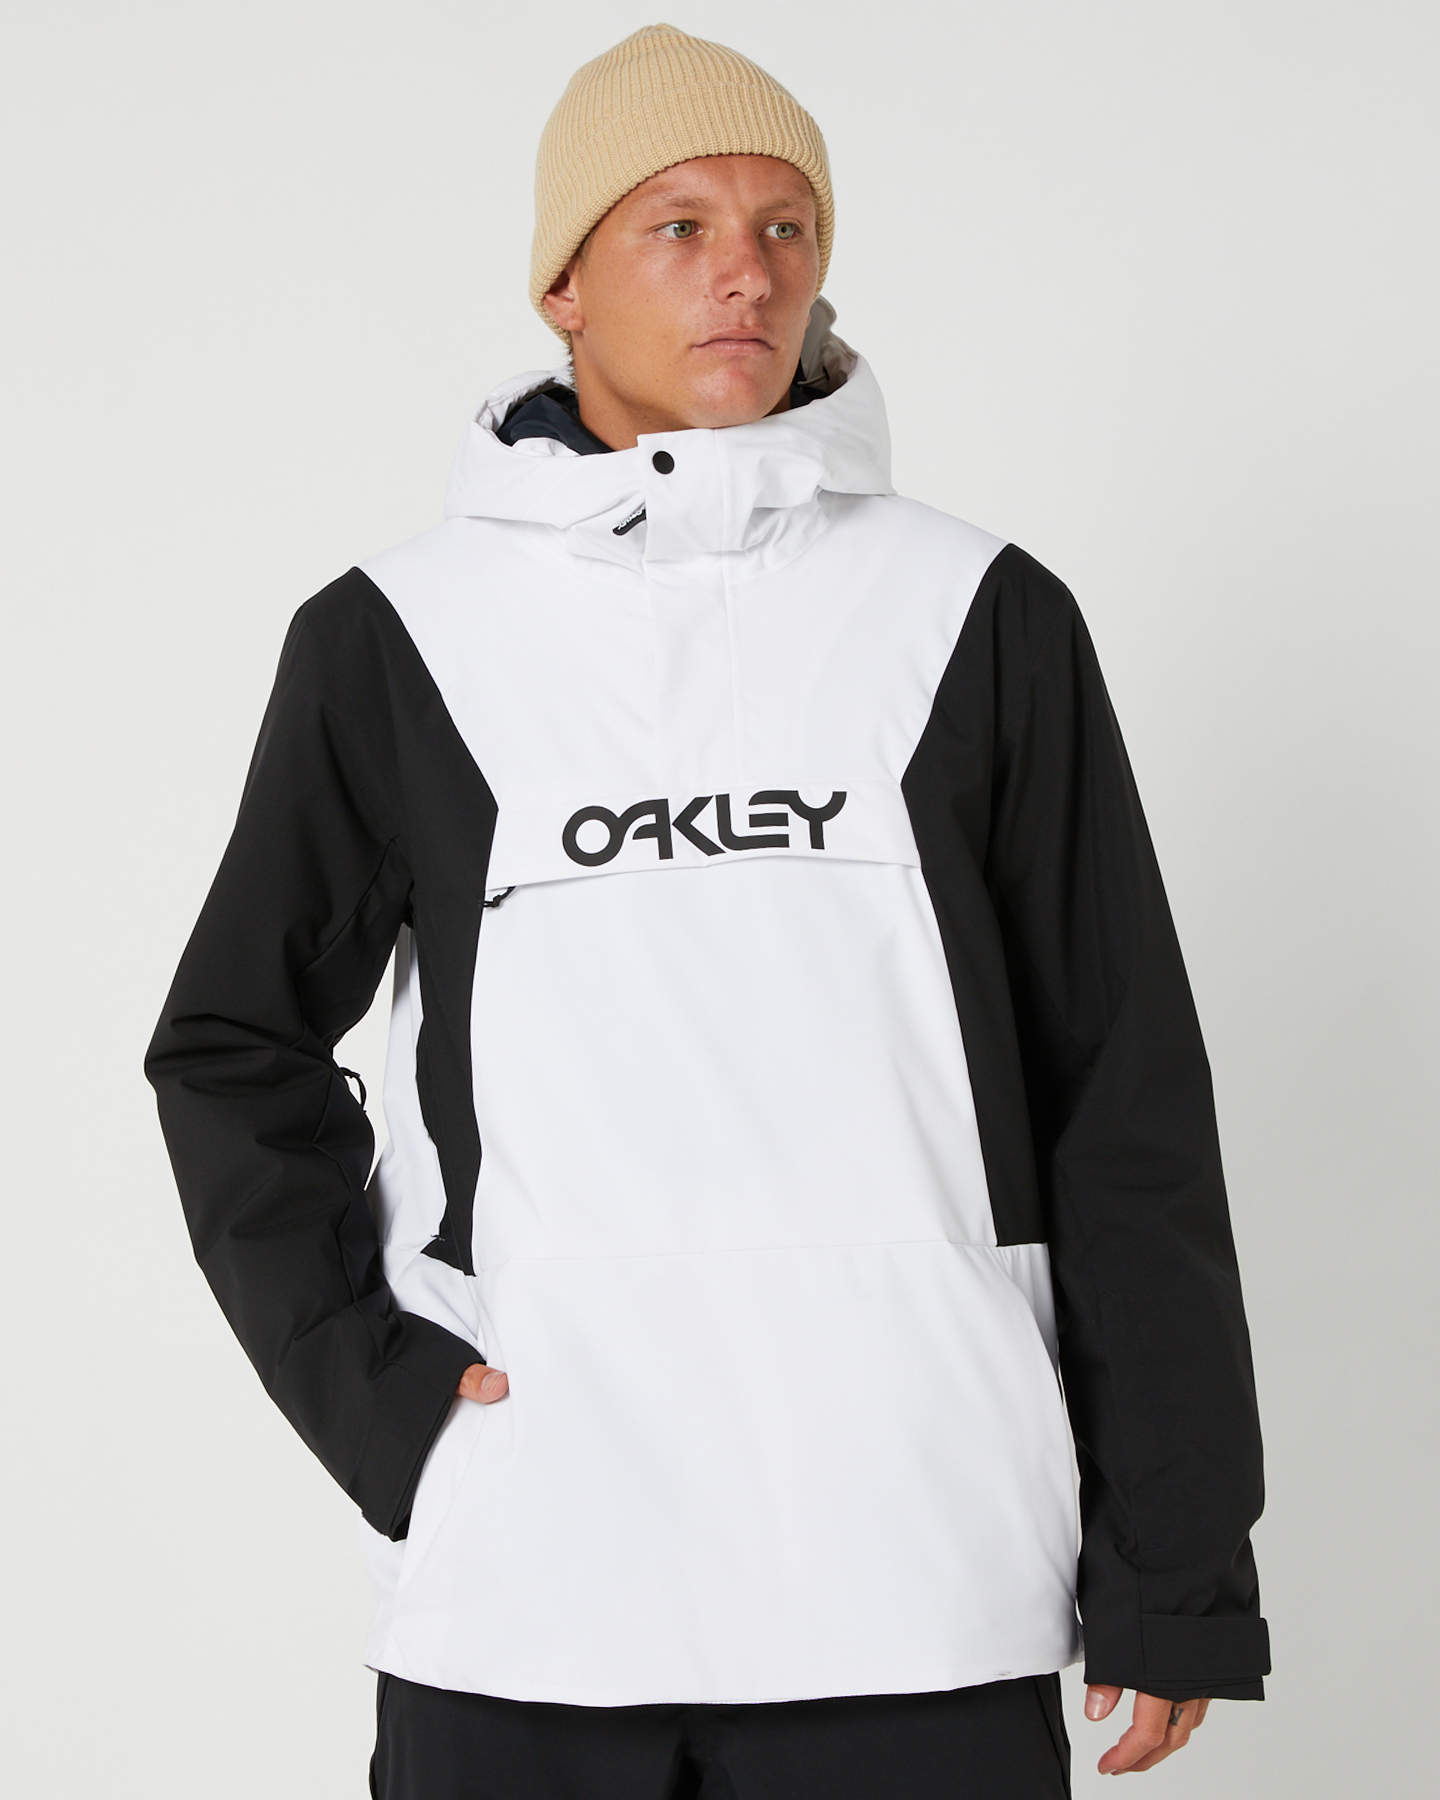 Oakley Tnp Tbt Insulated Anorak - White Black | SurfStitch